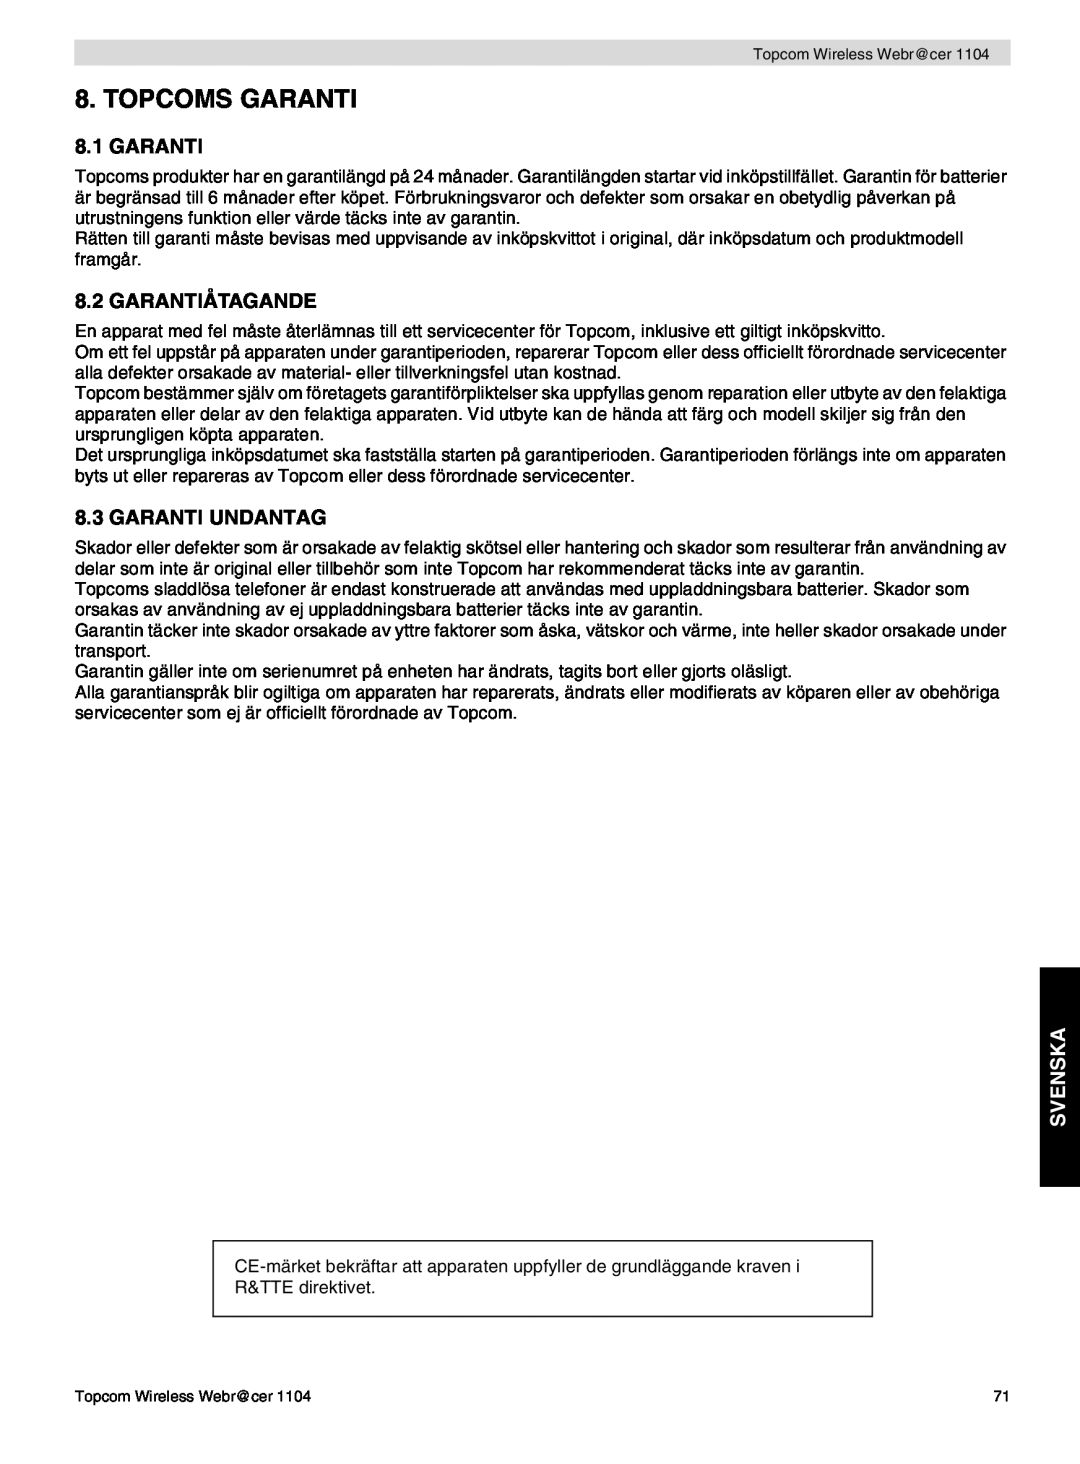 Topcom 1104 manual do utilizador Topcoms Garanti, Garantiåtagande, Garanti Undantag, Svenska 